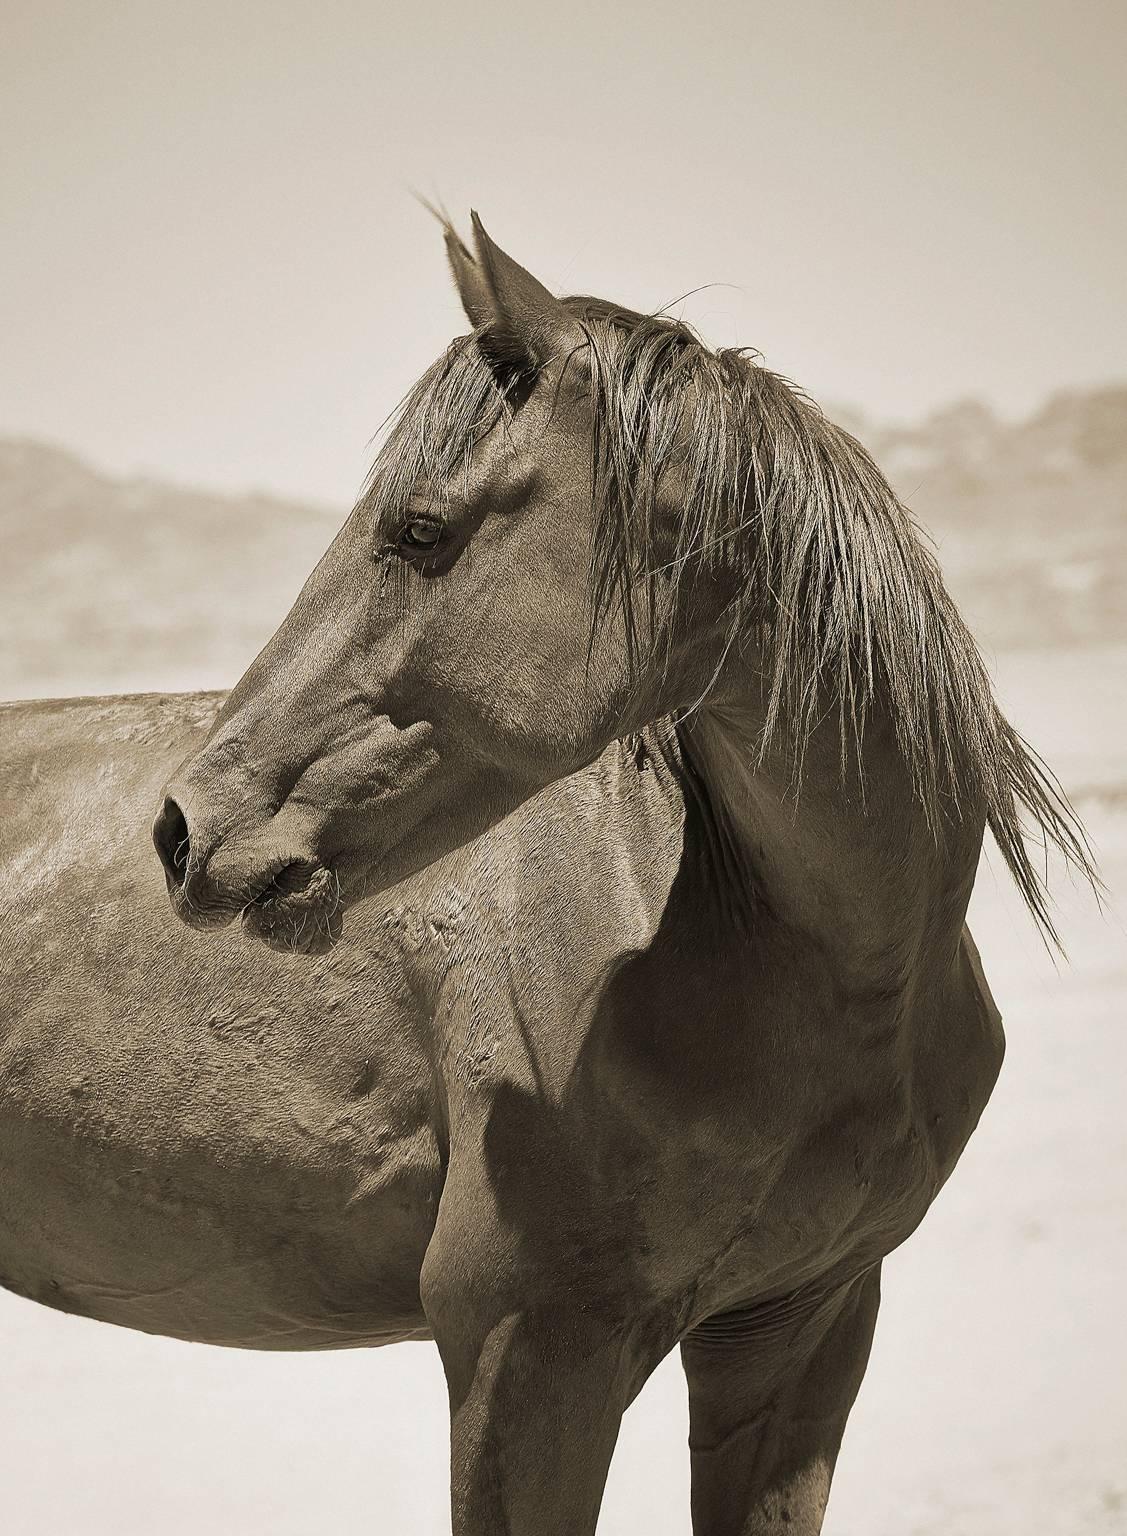 Chris Gordaneer Black and White Photograph - Namibian Horse No. 2